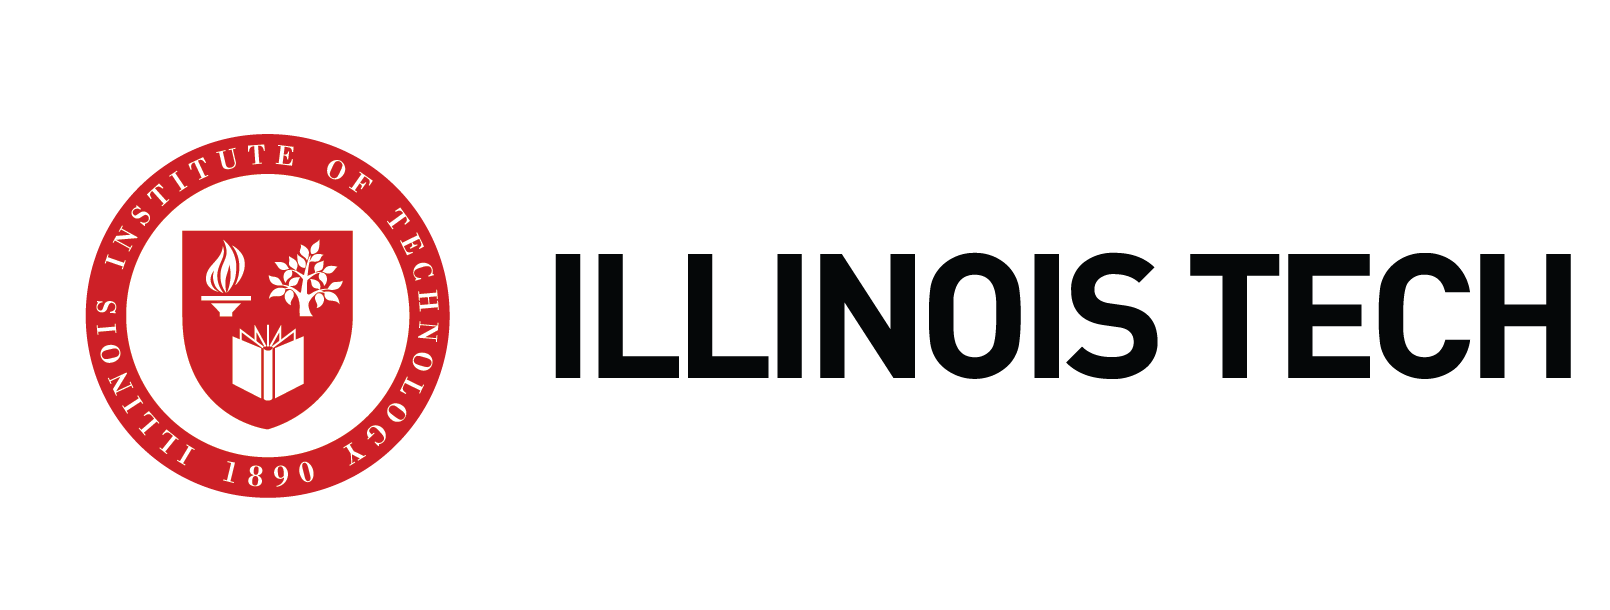 Illinois Institute of Technology logo.